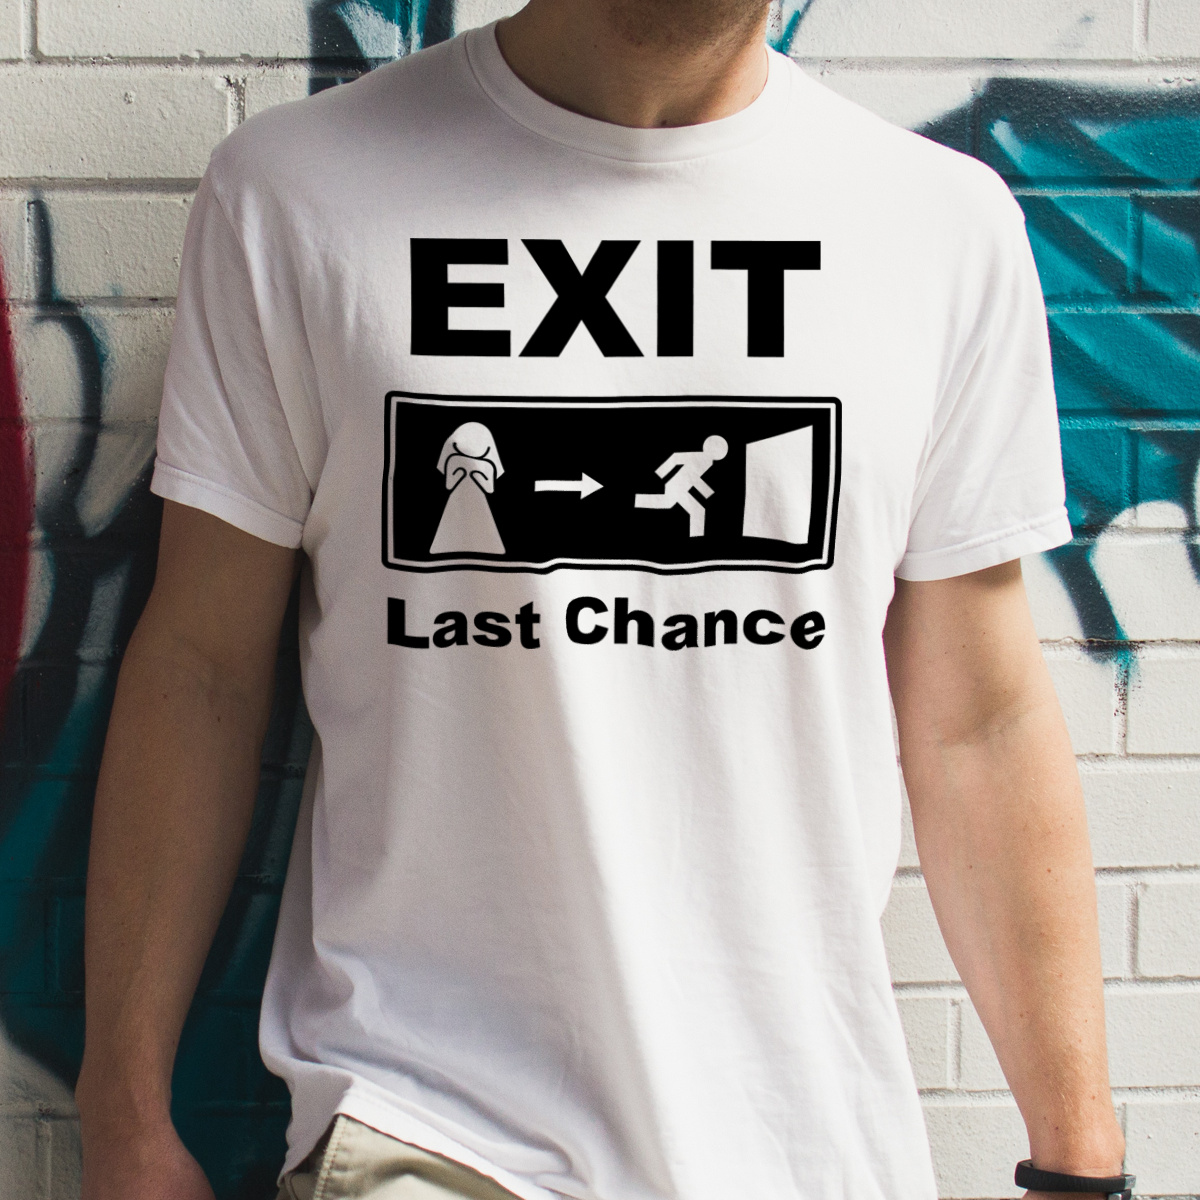 EXIT- Last Chance - Wieczór kawalerski - Męska Koszulka Biała